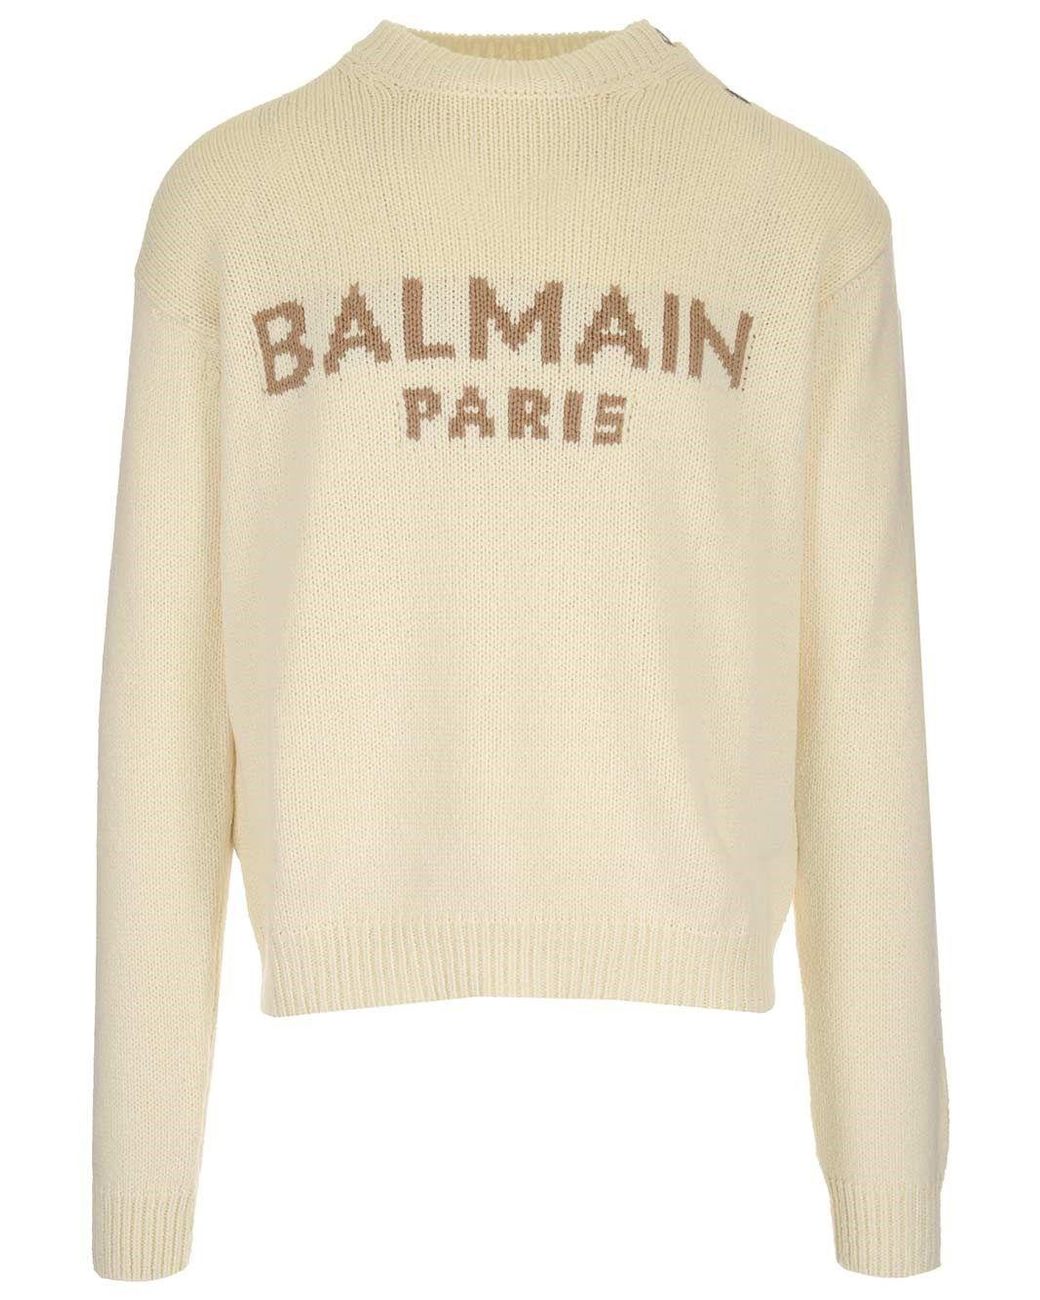 Balmain Wool Sweater in Beige (Natural) for Men - Lyst